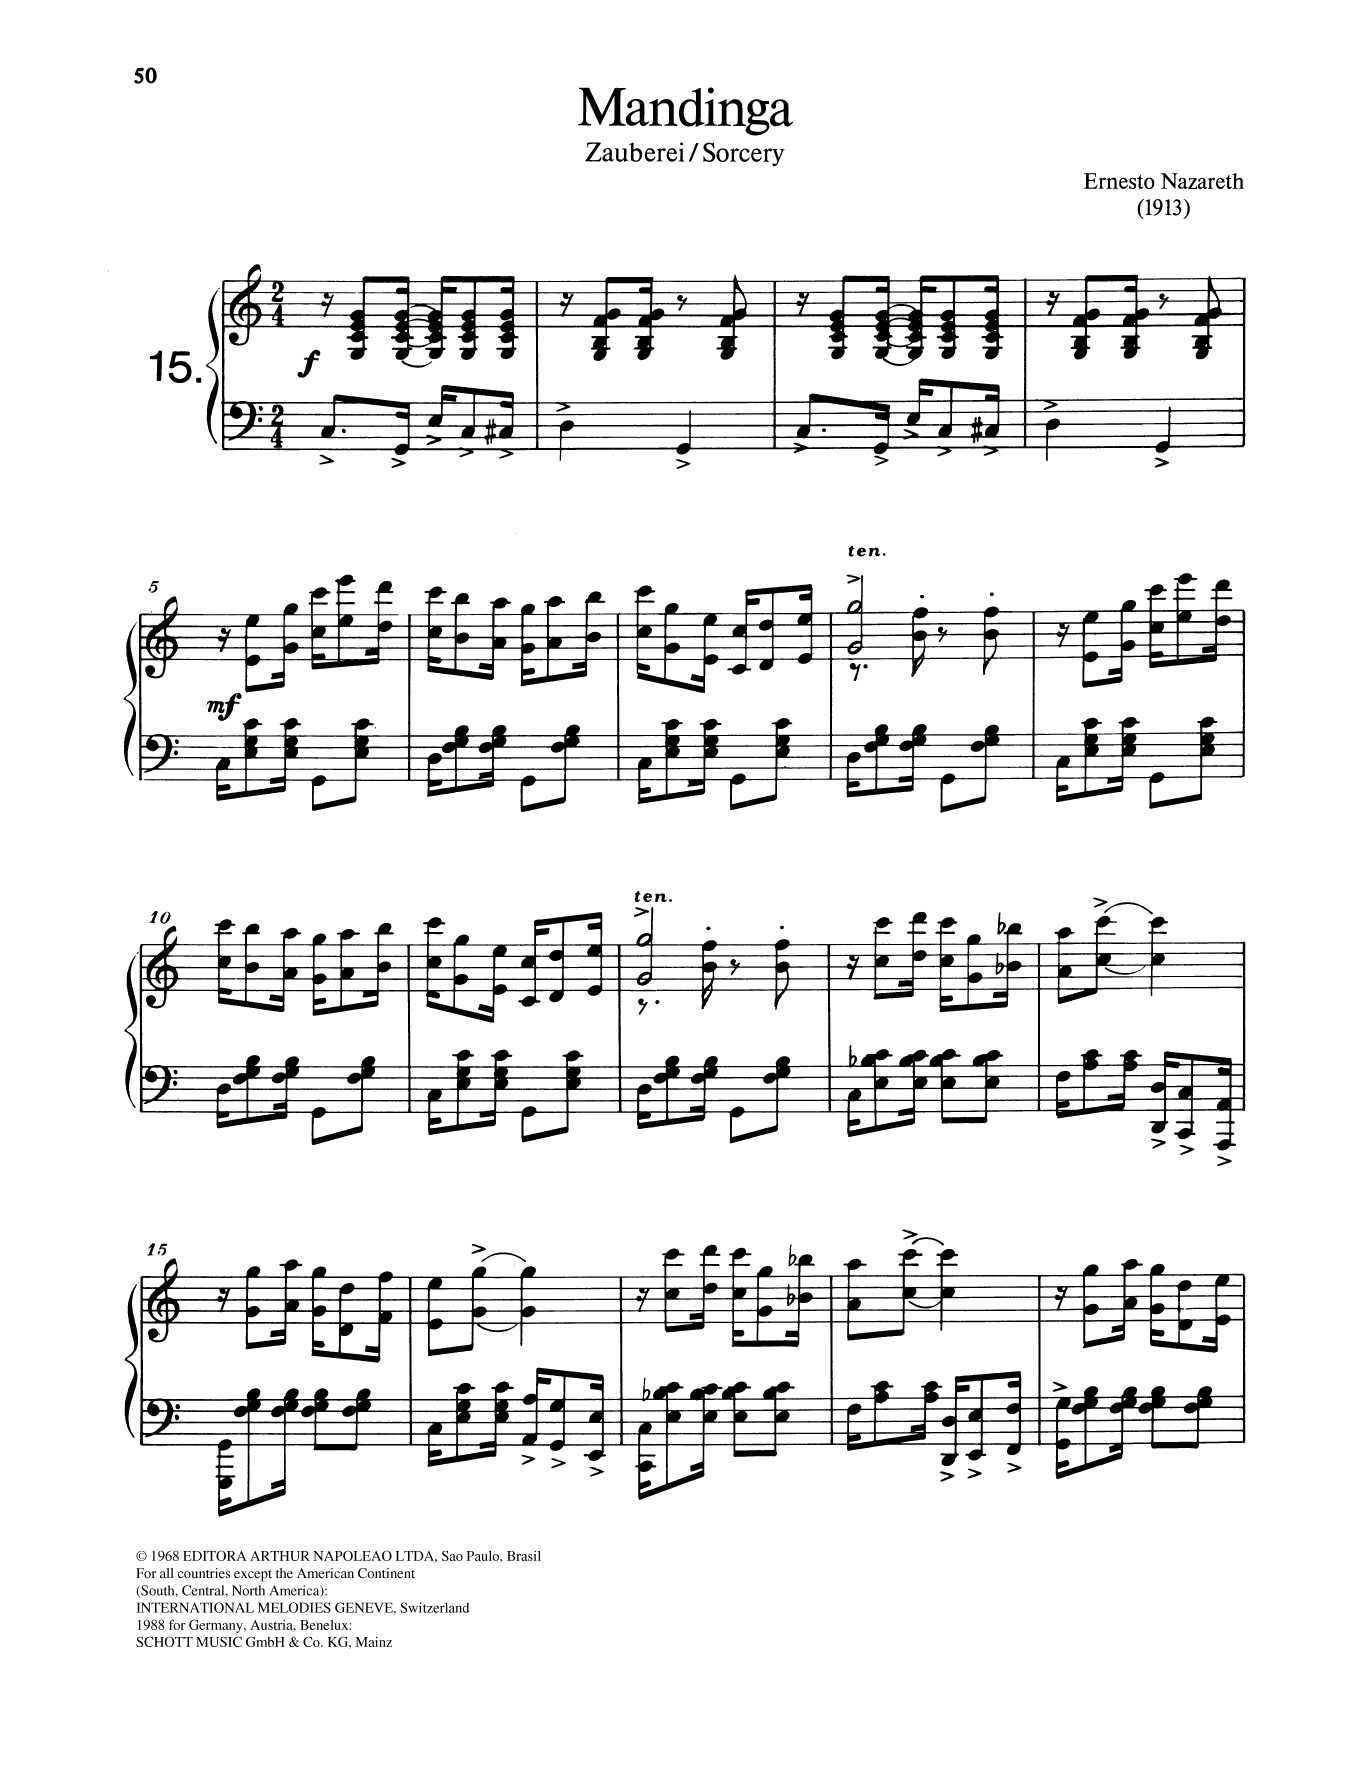 Ernesto Nazareth Mandinga Sheet Music Notes & Chords for Piano Solo - Download or Print PDF